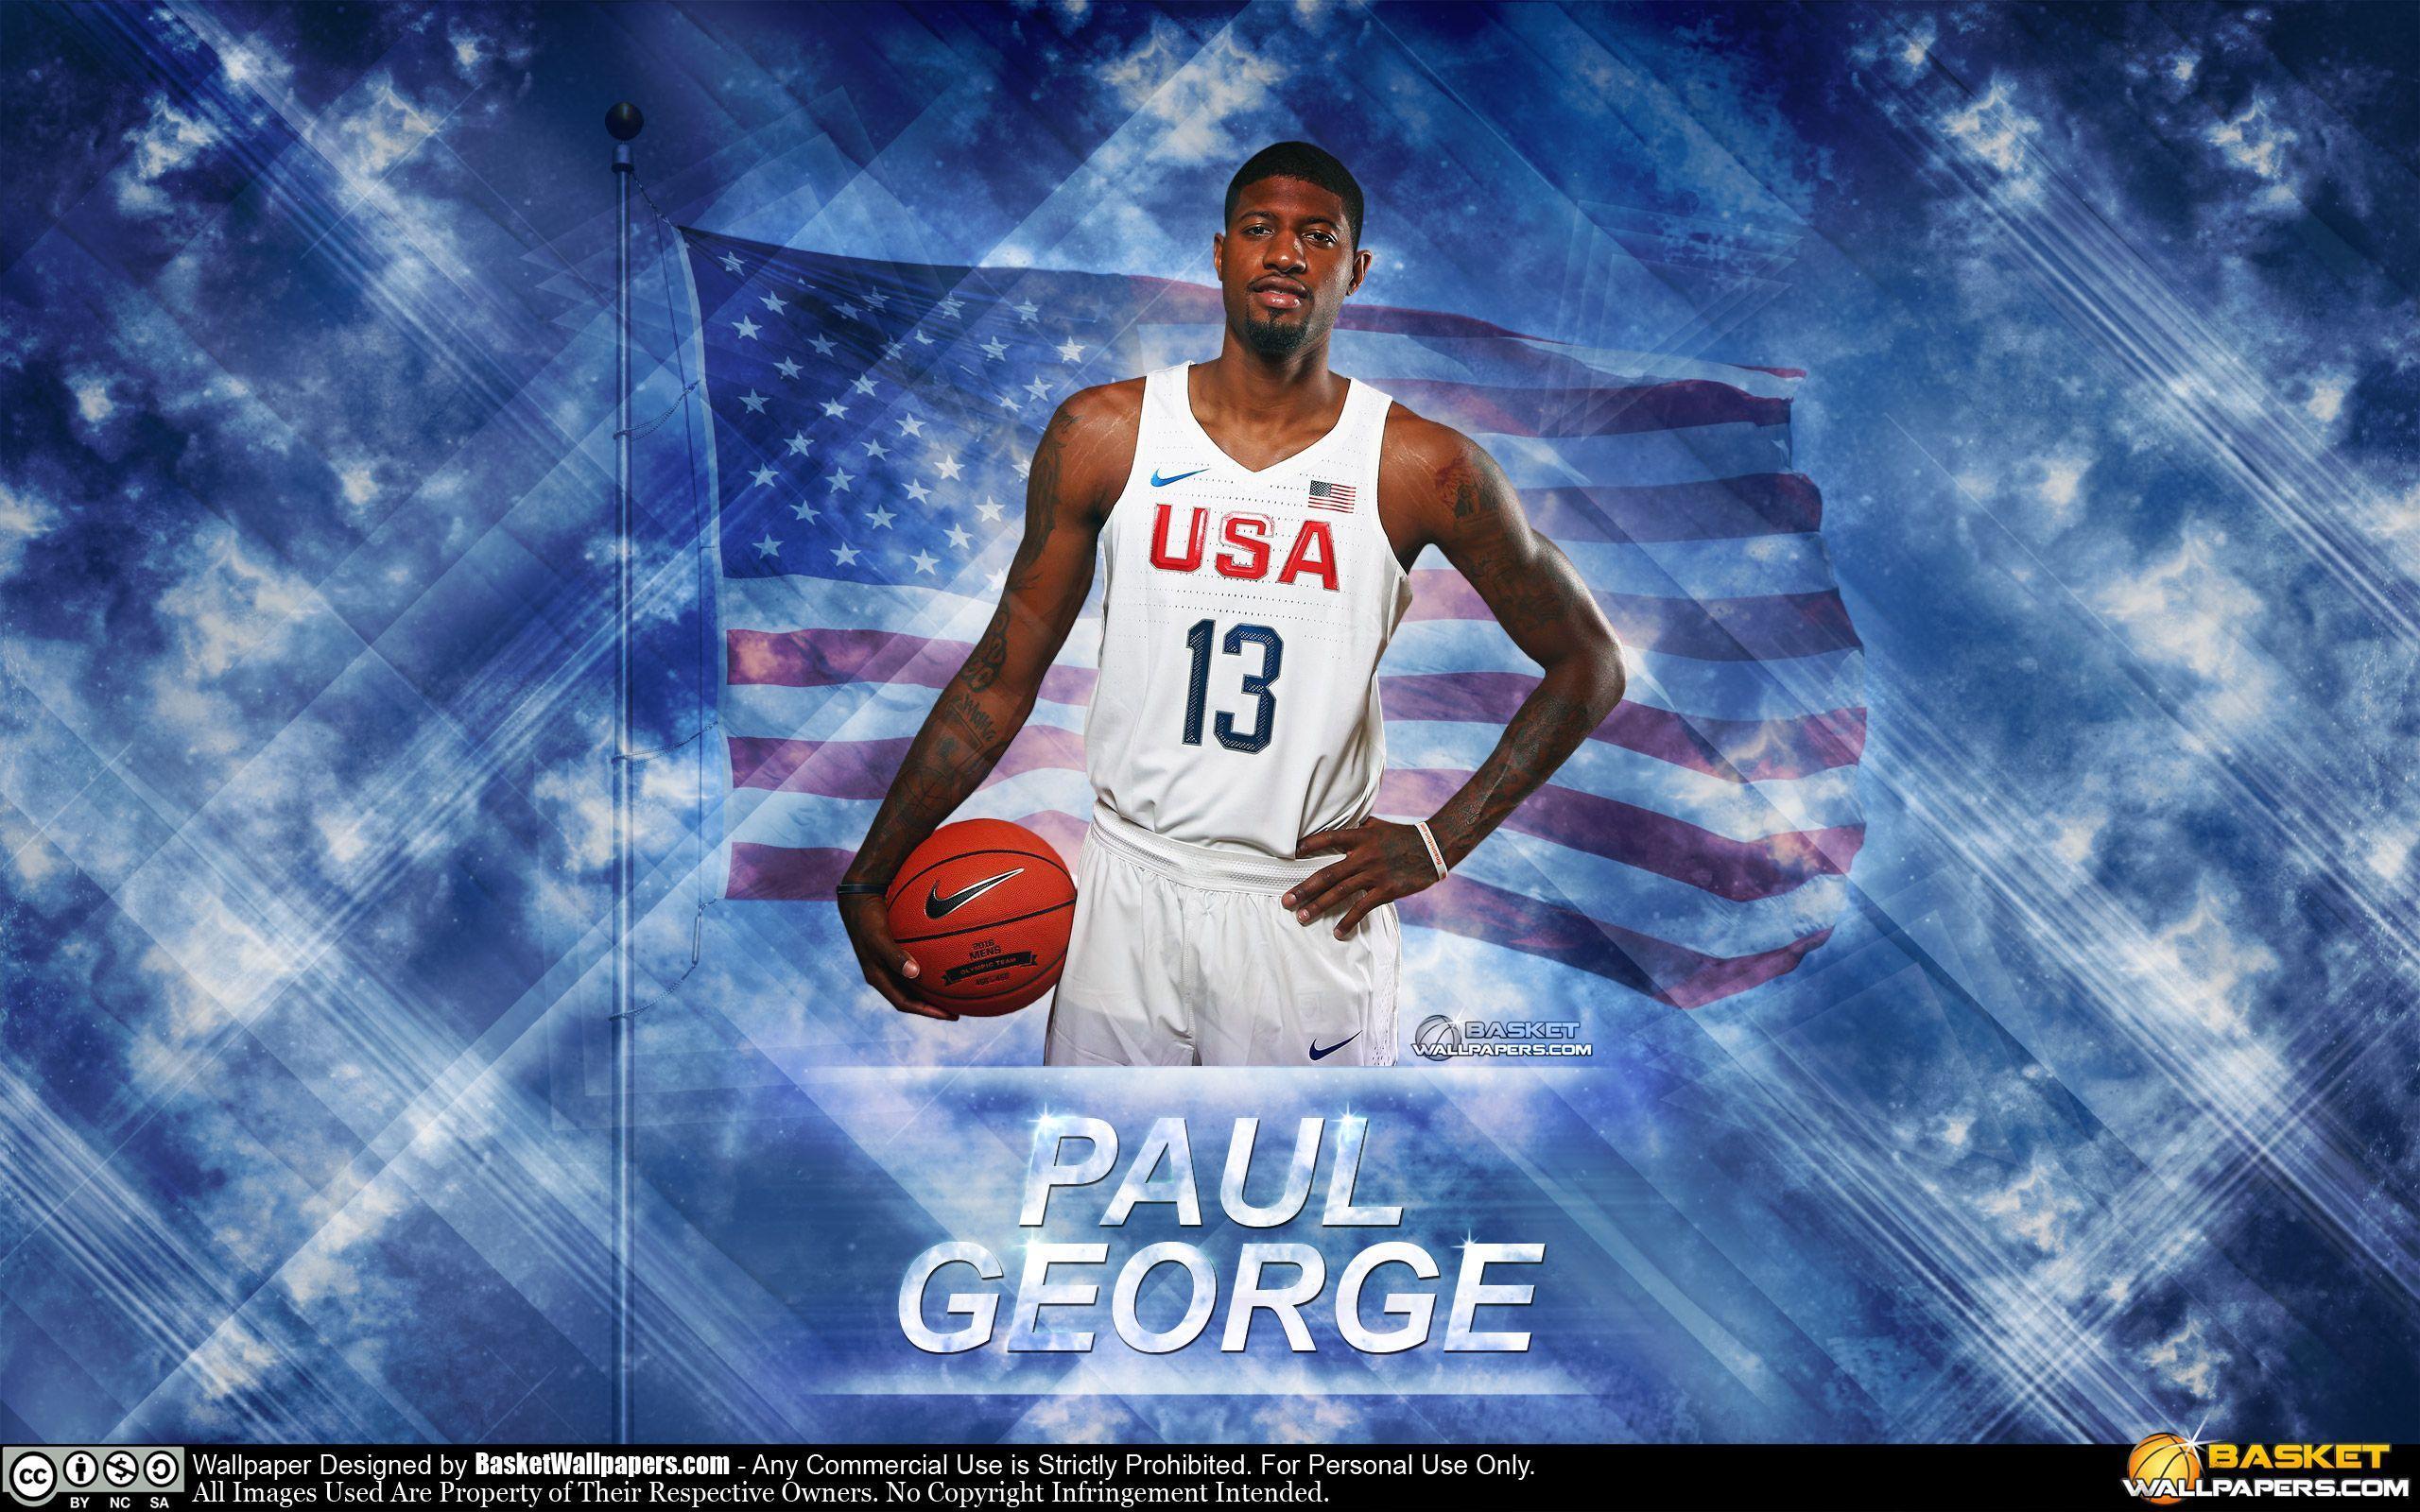 Paul George USA 2016 Olympics Wallpapers